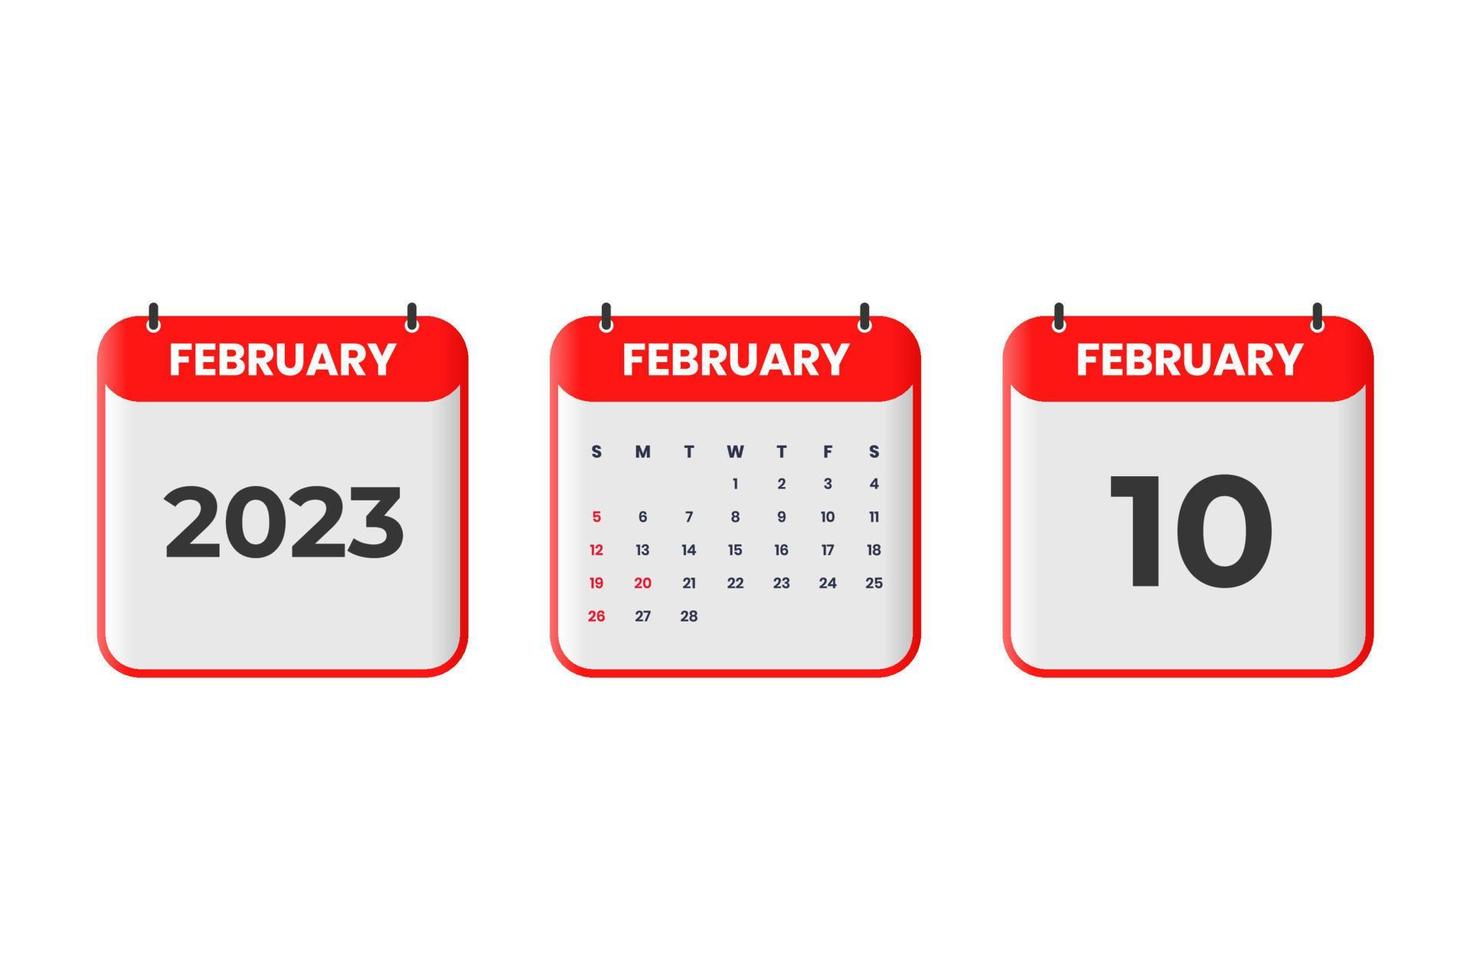 Februar 2023 Kalenderdesign. 10. Februar 2023 Kalendersymbol für Zeitplan, Termin, wichtiges Datumskonzept vektor